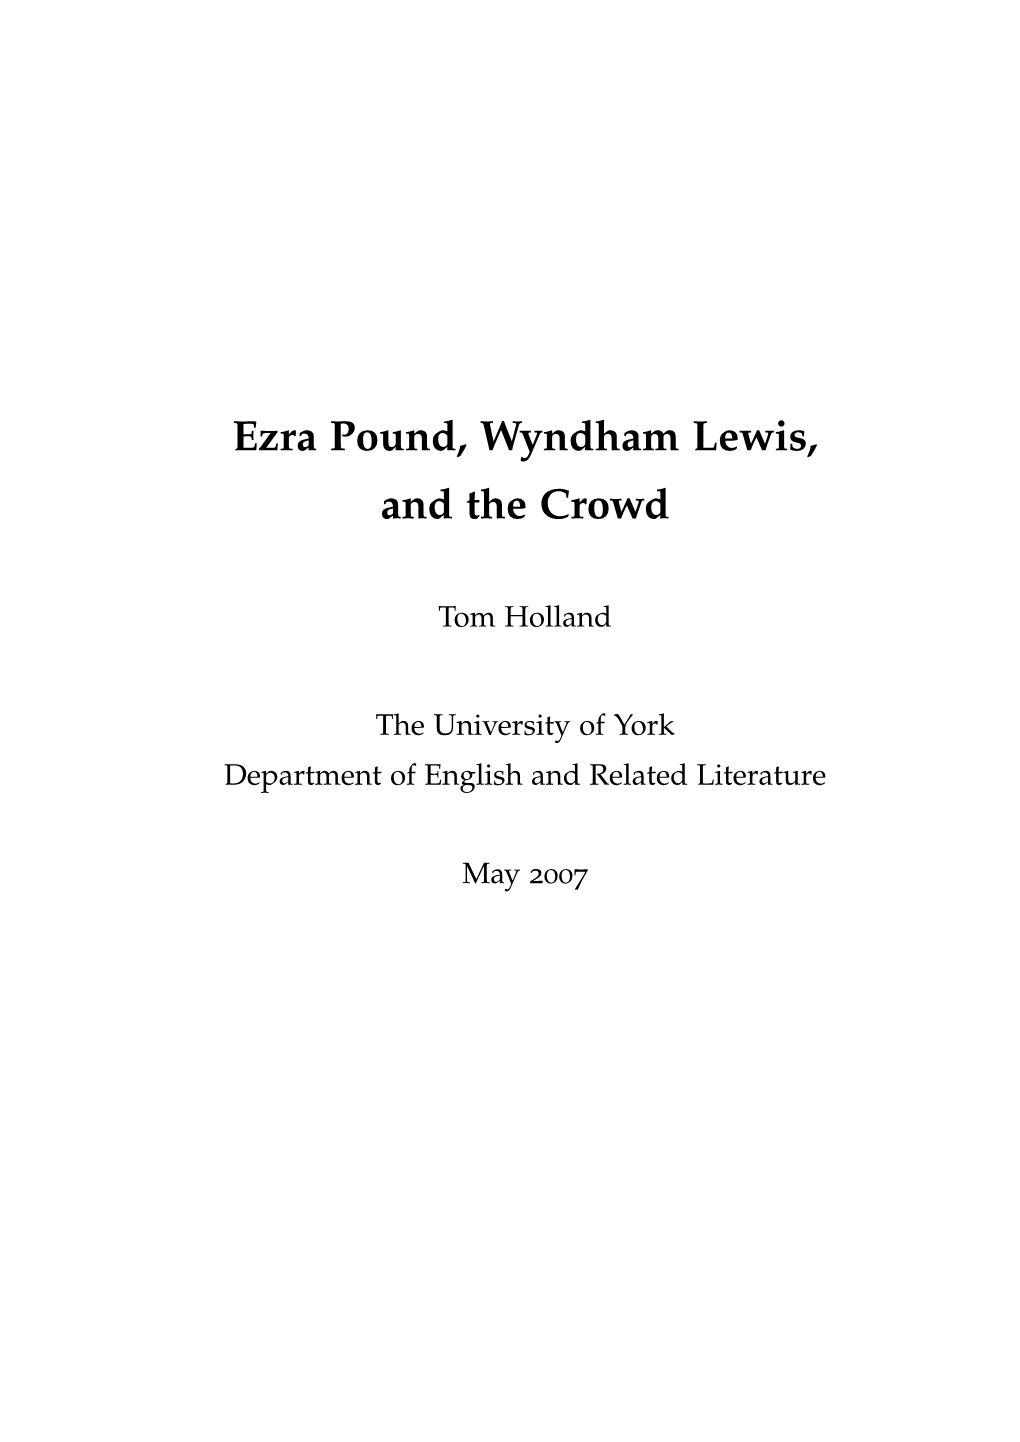 Ezra Pound, Wyndham Lewis, and the Crowd